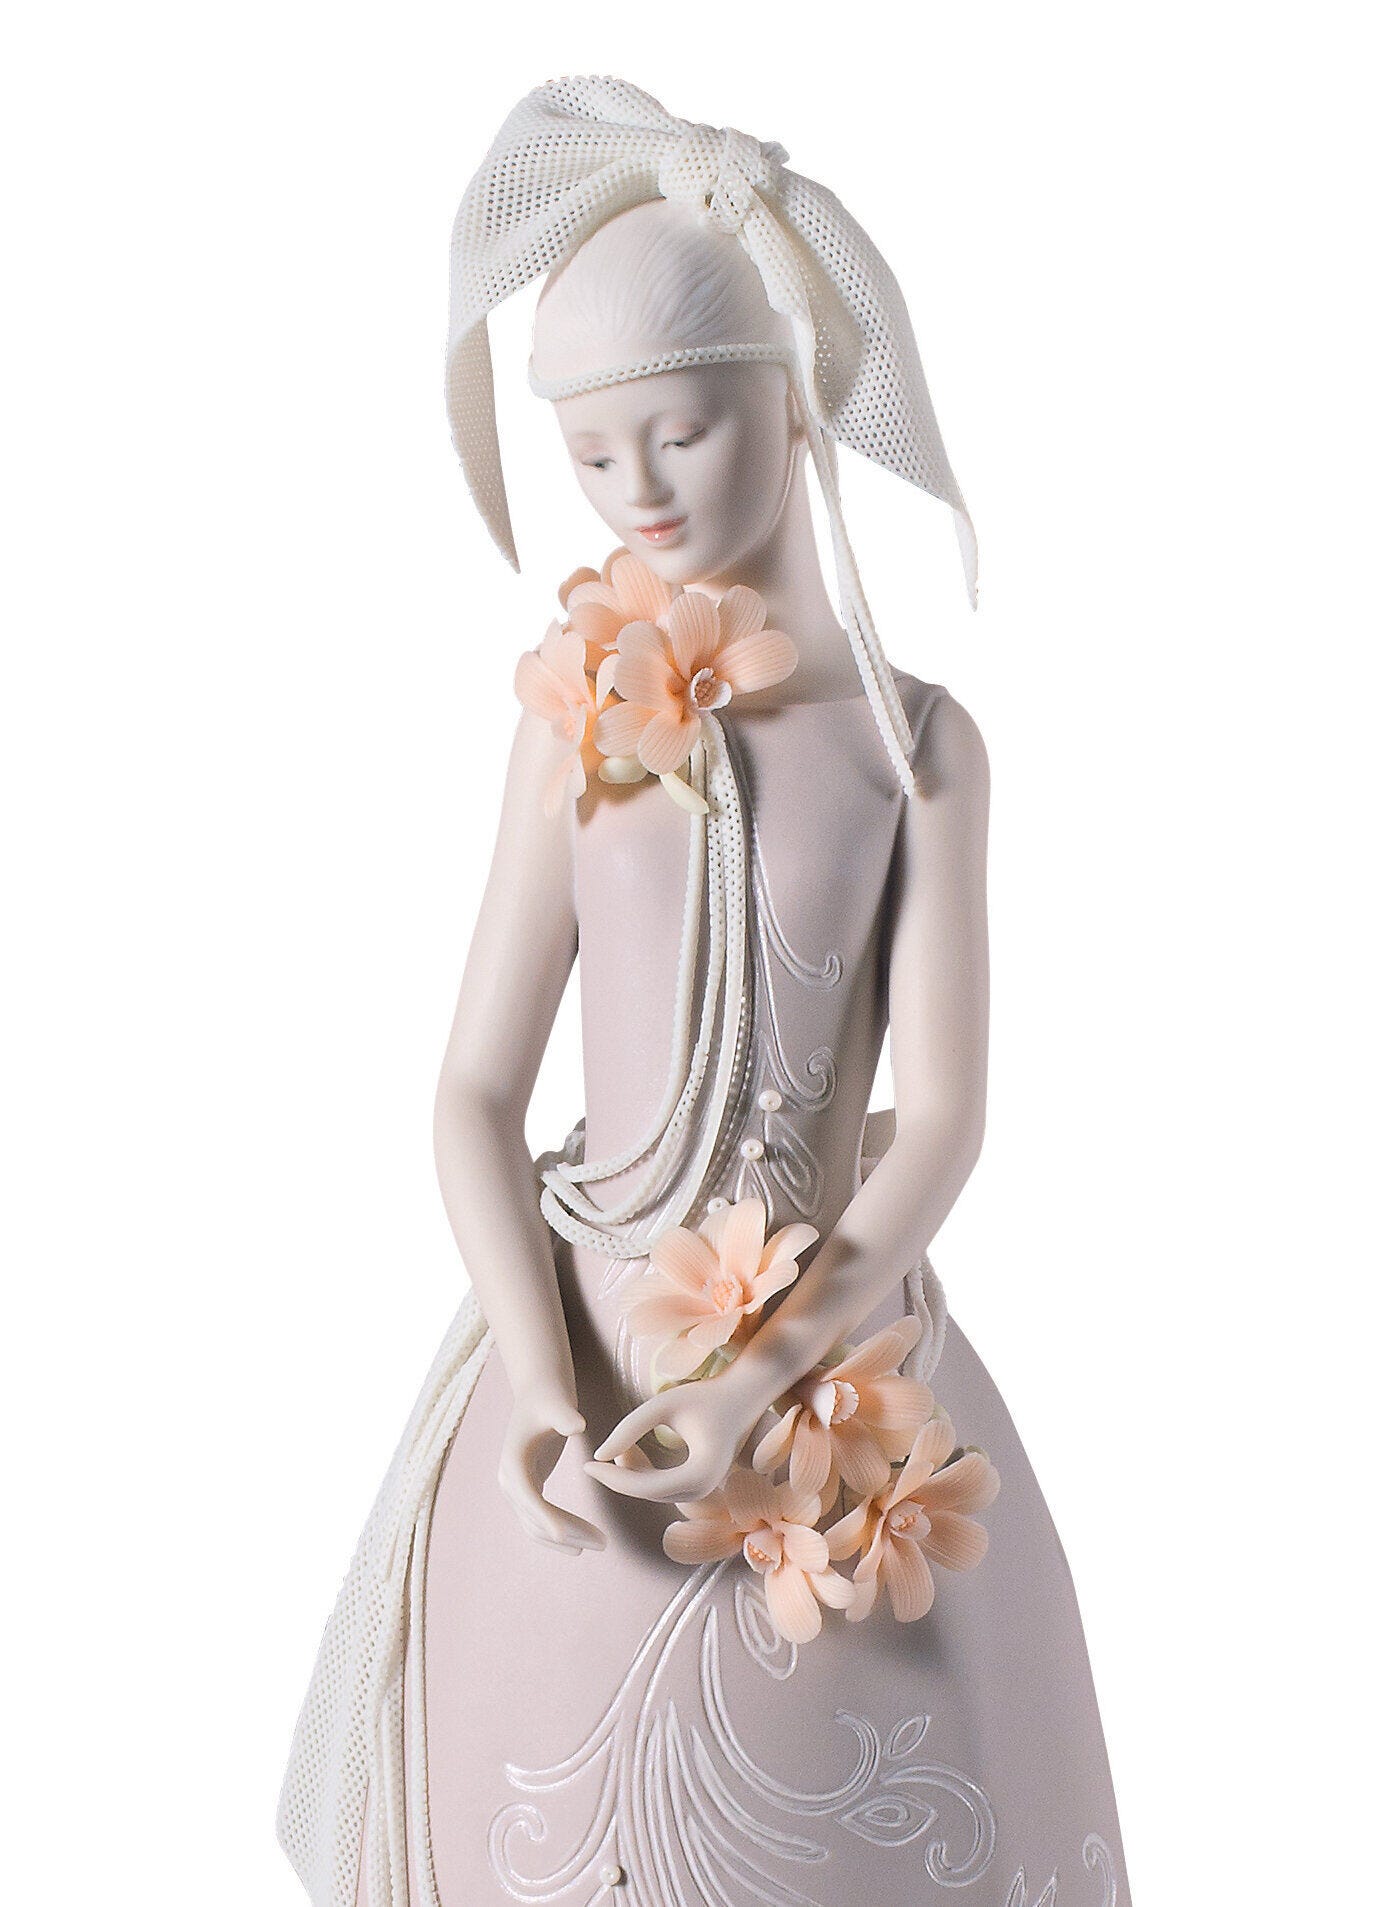 Haute Allure Exclusive Model Woman Figurine. Limited Edition 